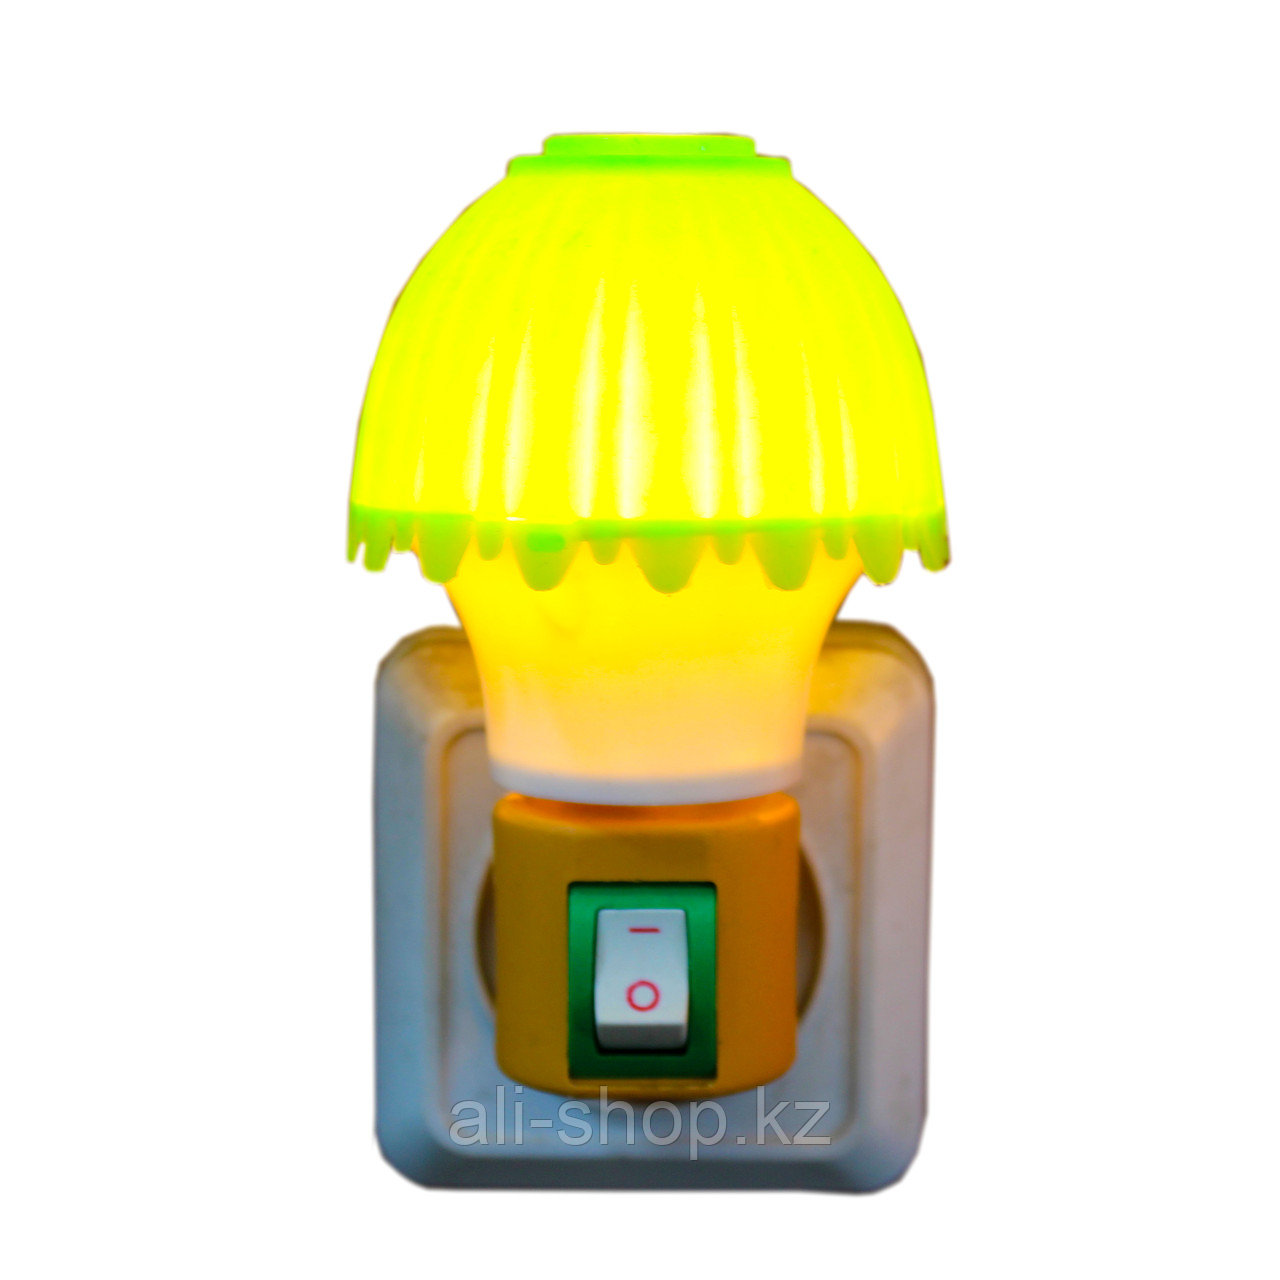 LED ночник в розетку "Лампа", желто-зеленый